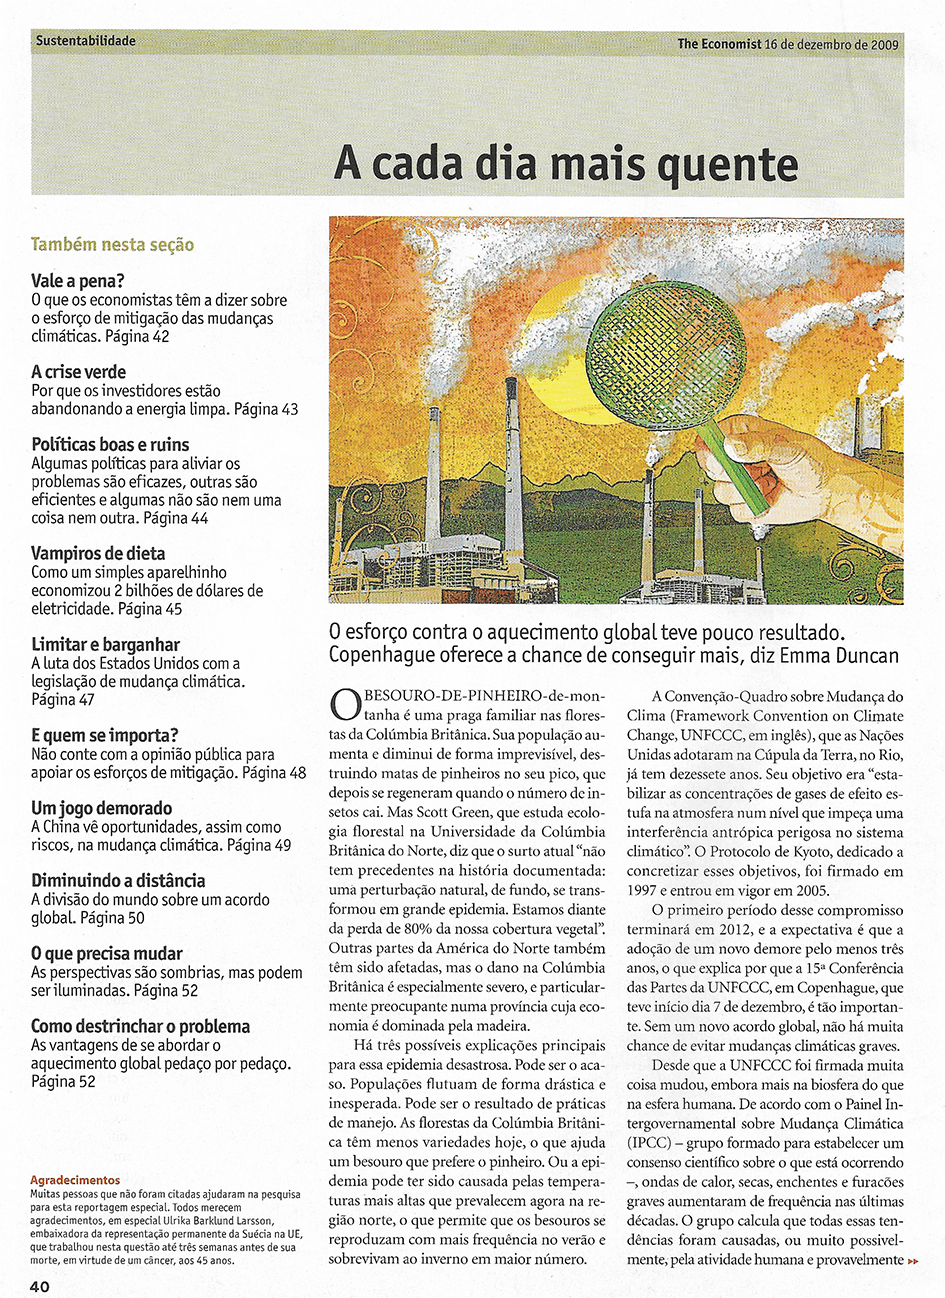 Cover illustration for Carta Capital Special Economist magazine: CO2